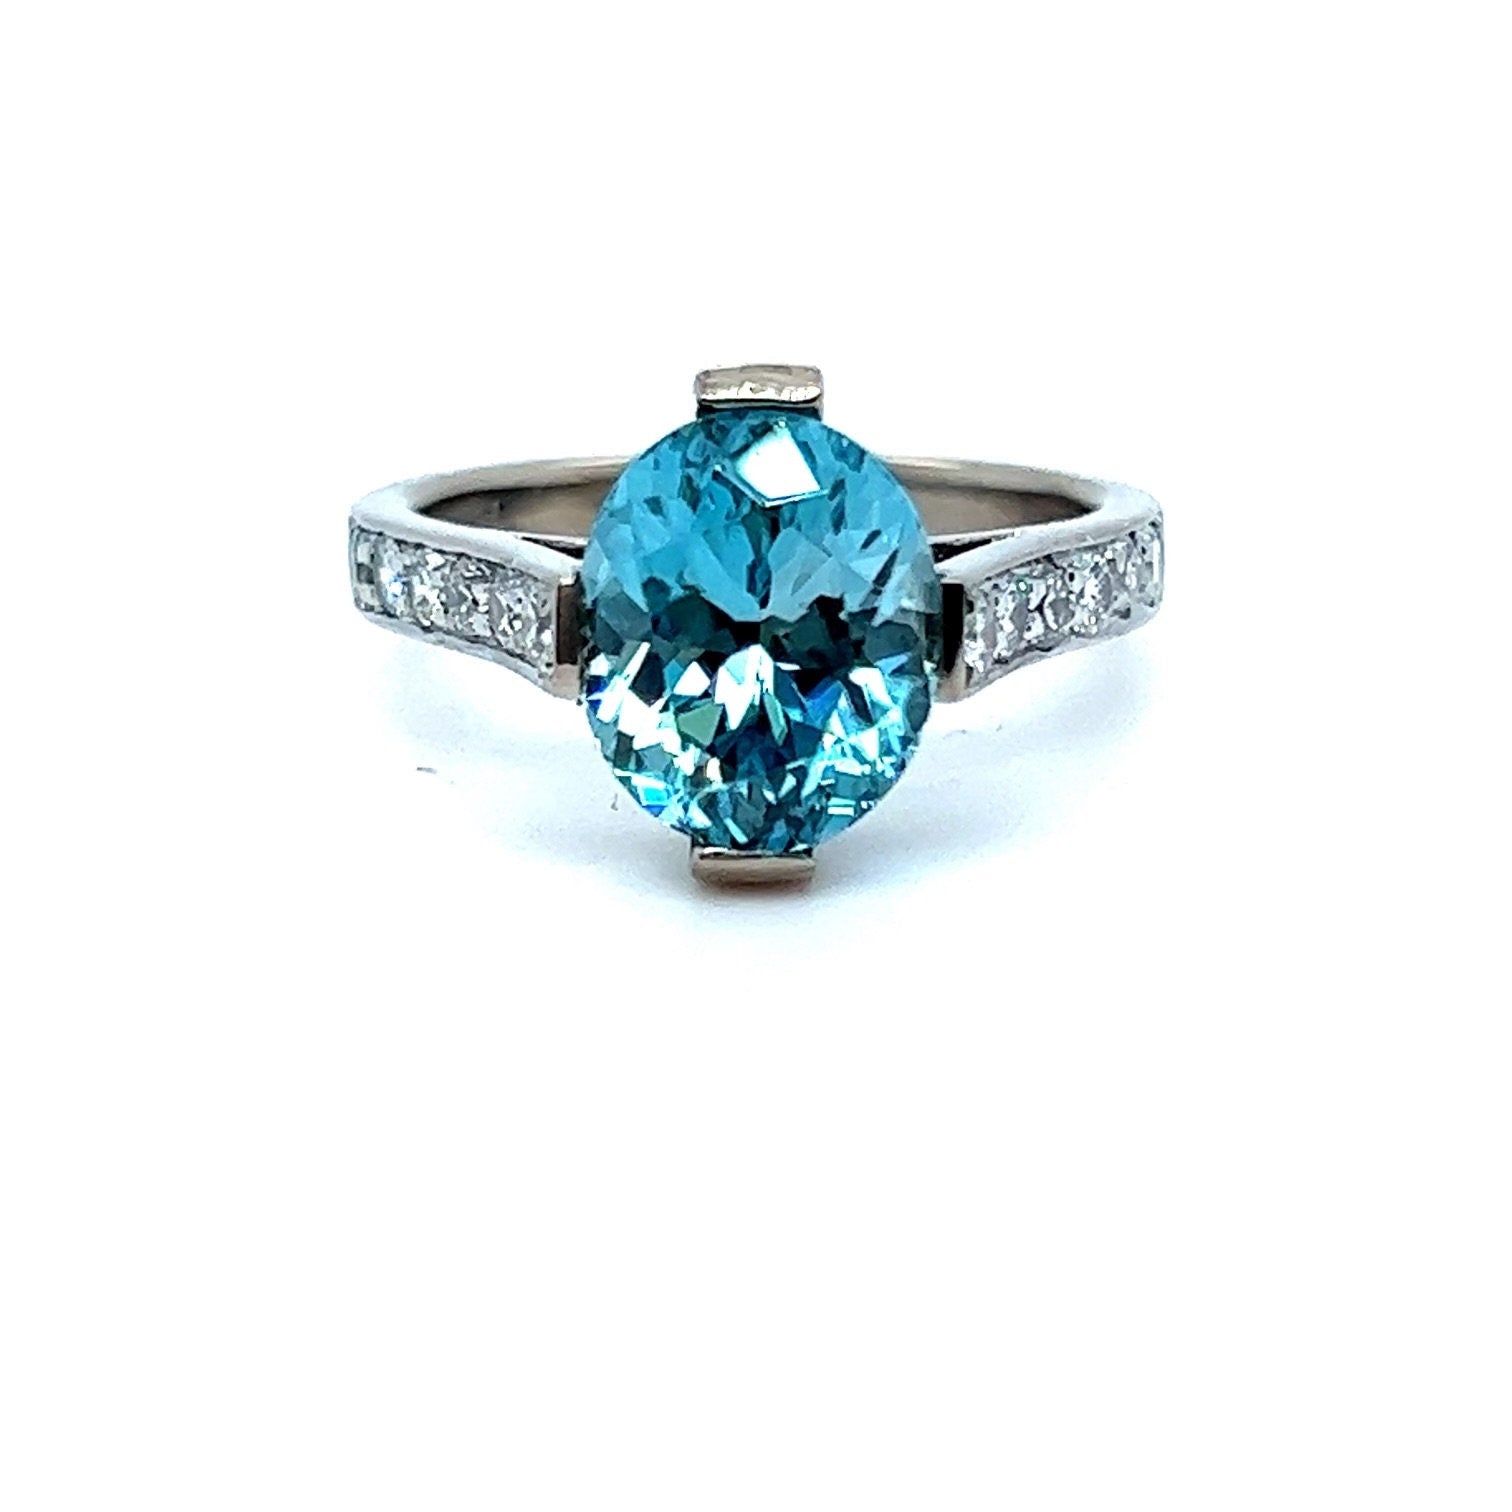 Stunning Vintage 18K White Gold Diamond and Blue Zircon Engagement Ring - 4.36ct.